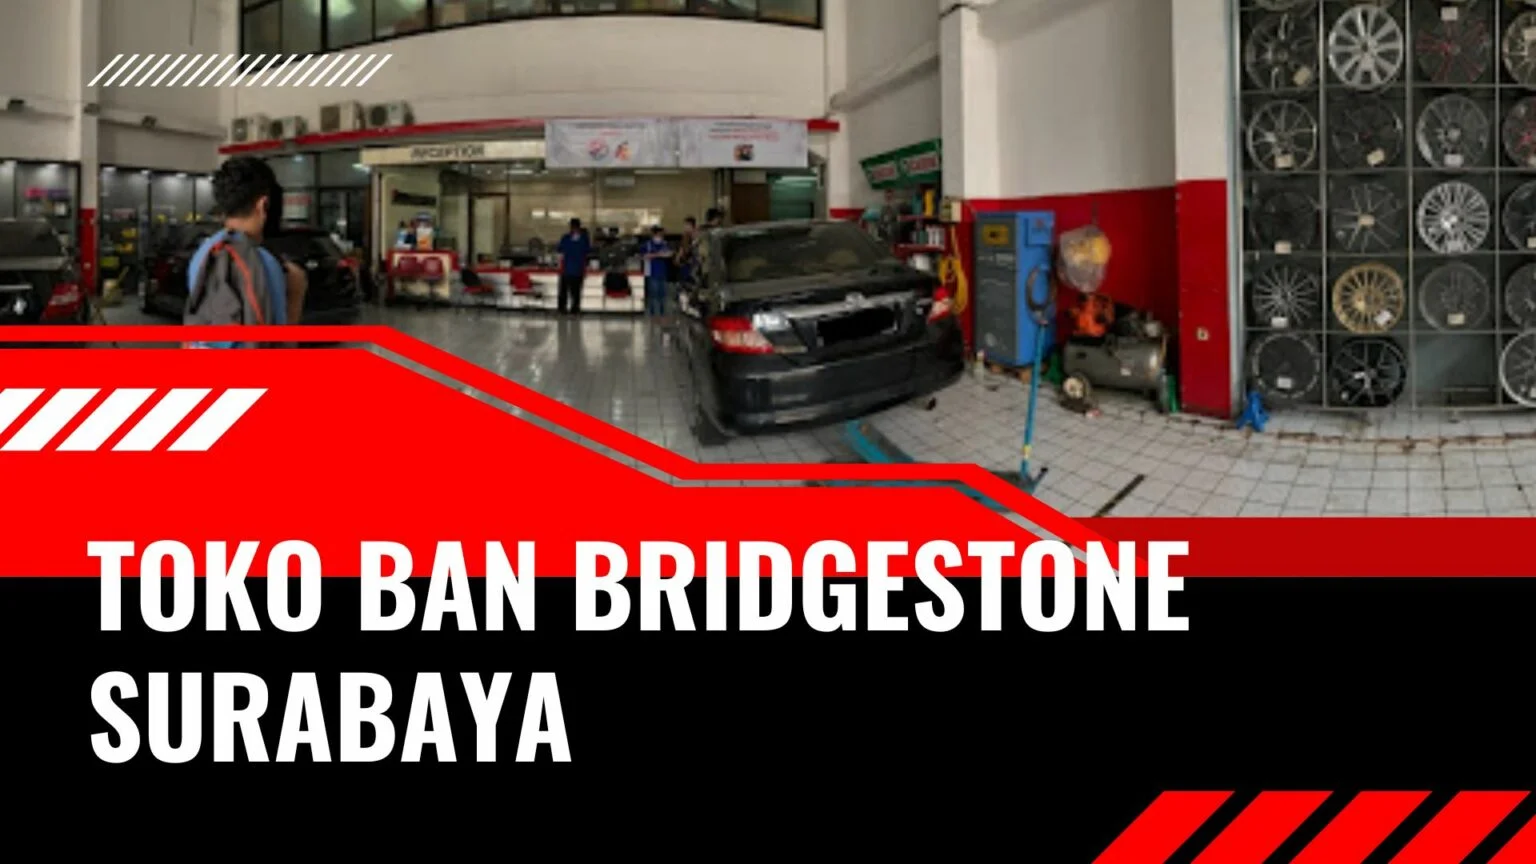 Toko Ban Bridgestone Surabaya